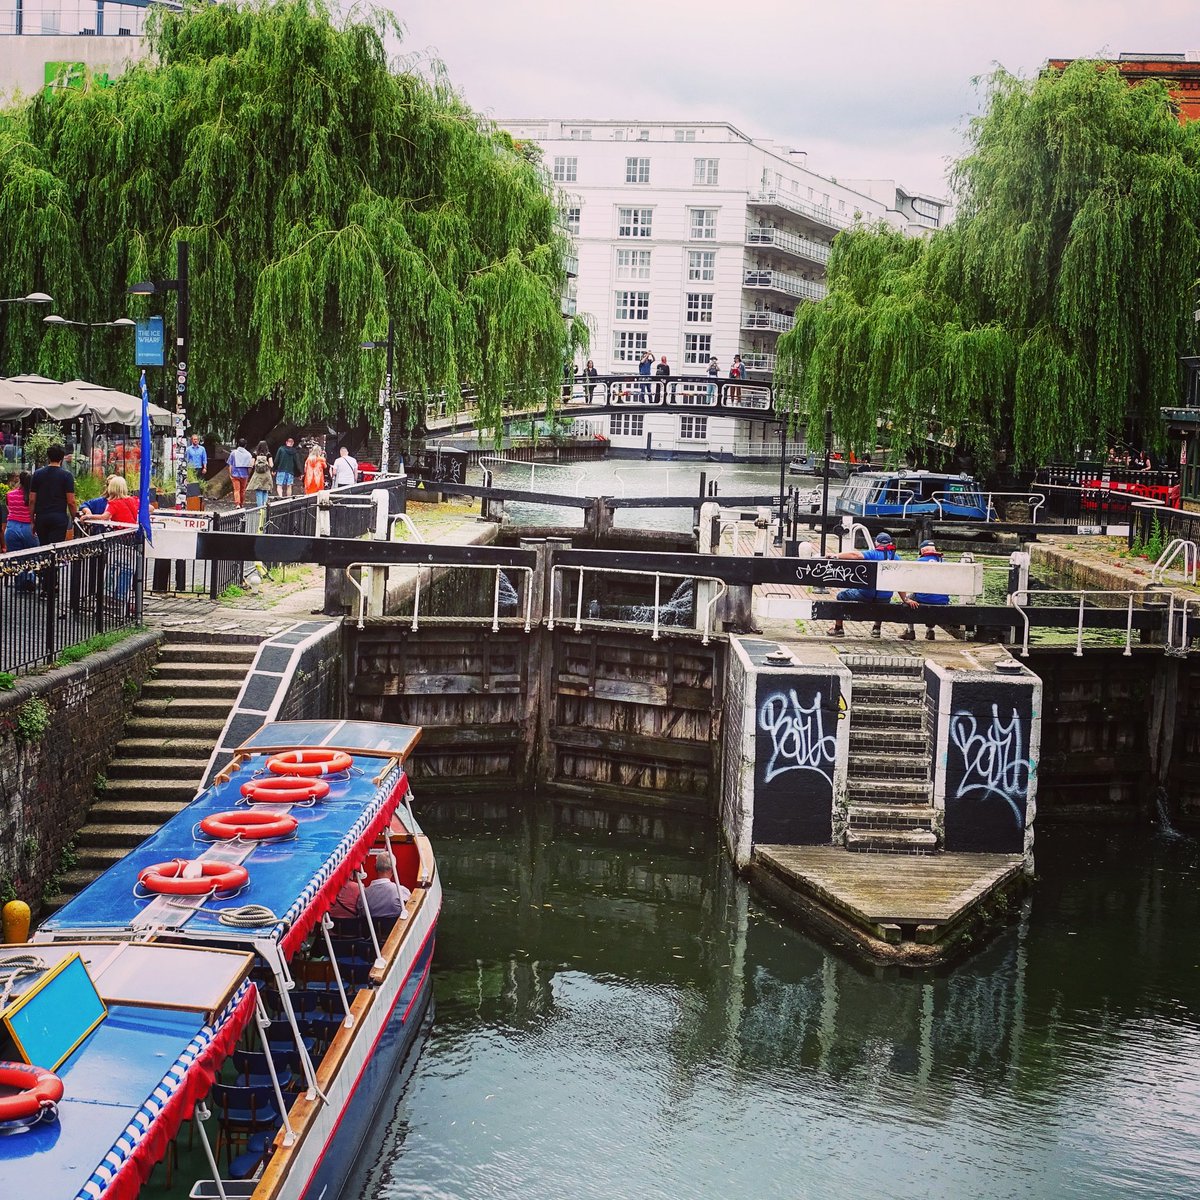 Camden ❤️ #camden #camdentown #camdenmarket #camdenlock #canal #regentscanal #canalboats #london #daysout #june #sunshine #happydays